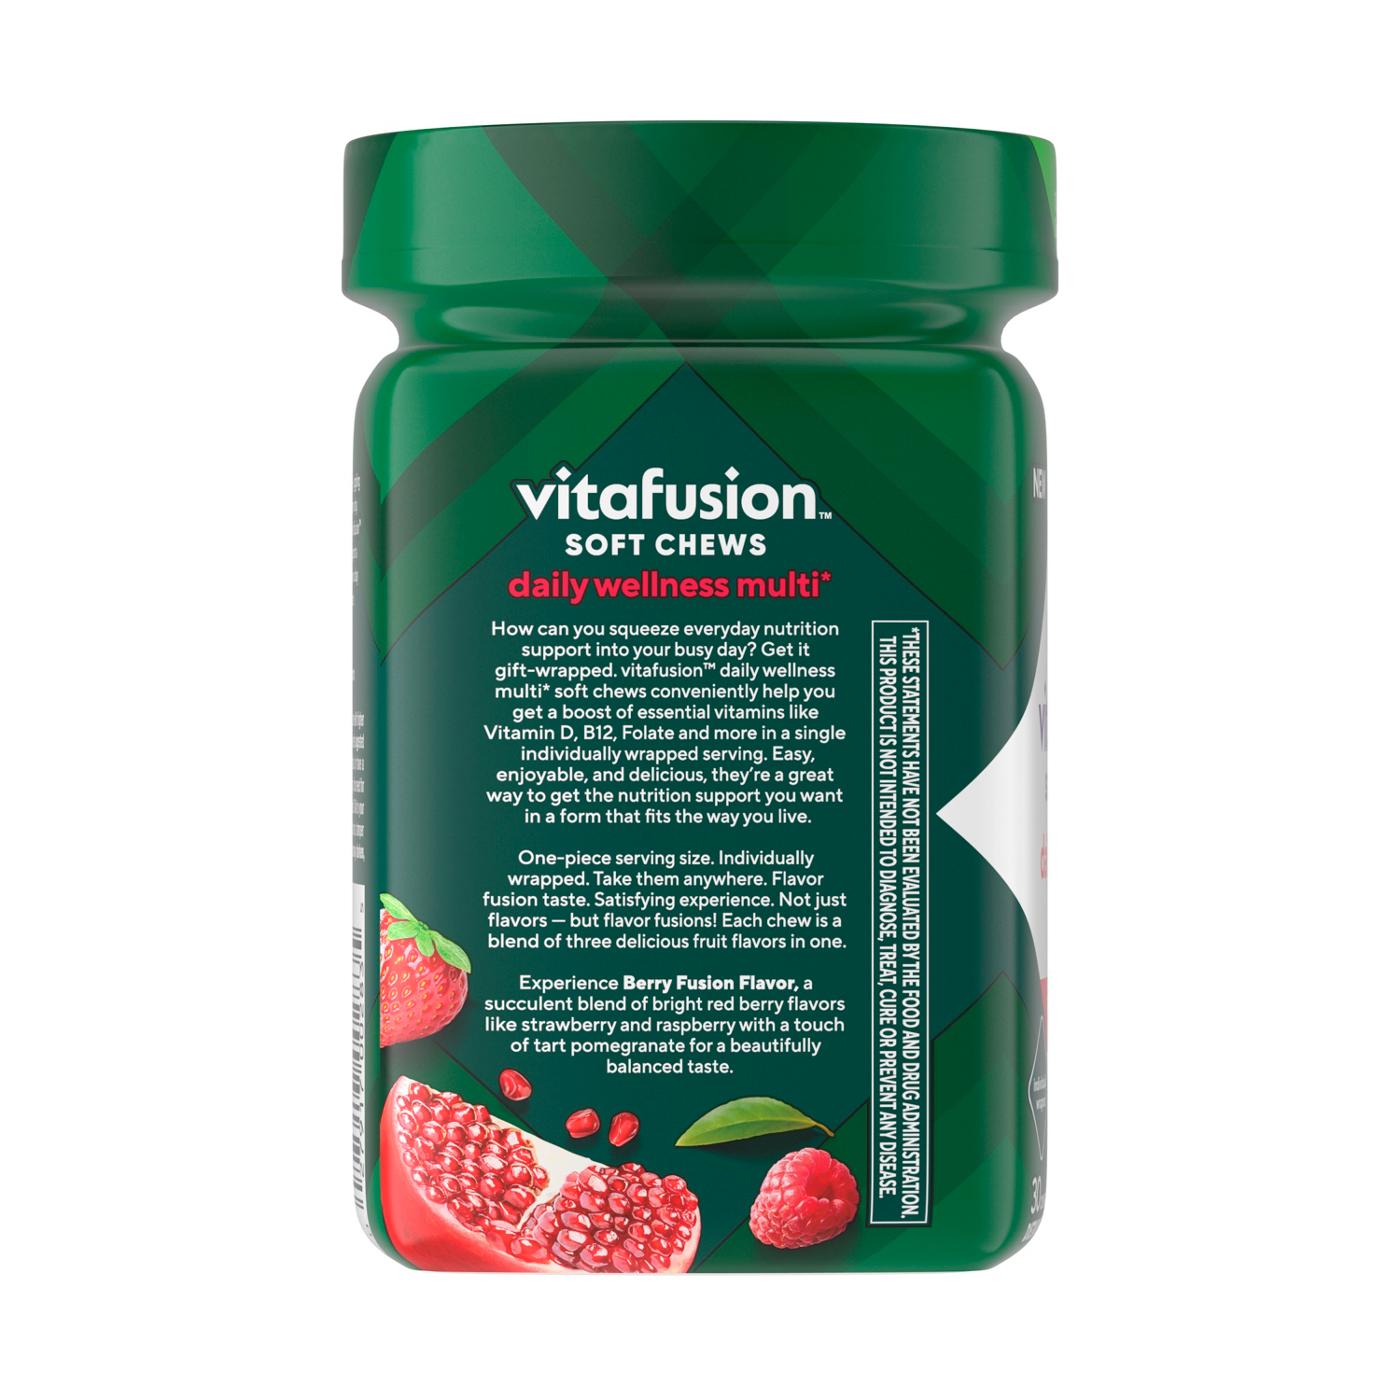 Vitafusion Soft Chews Daily Wellness Multi Chews - Berry Fusion; image 2 of 3